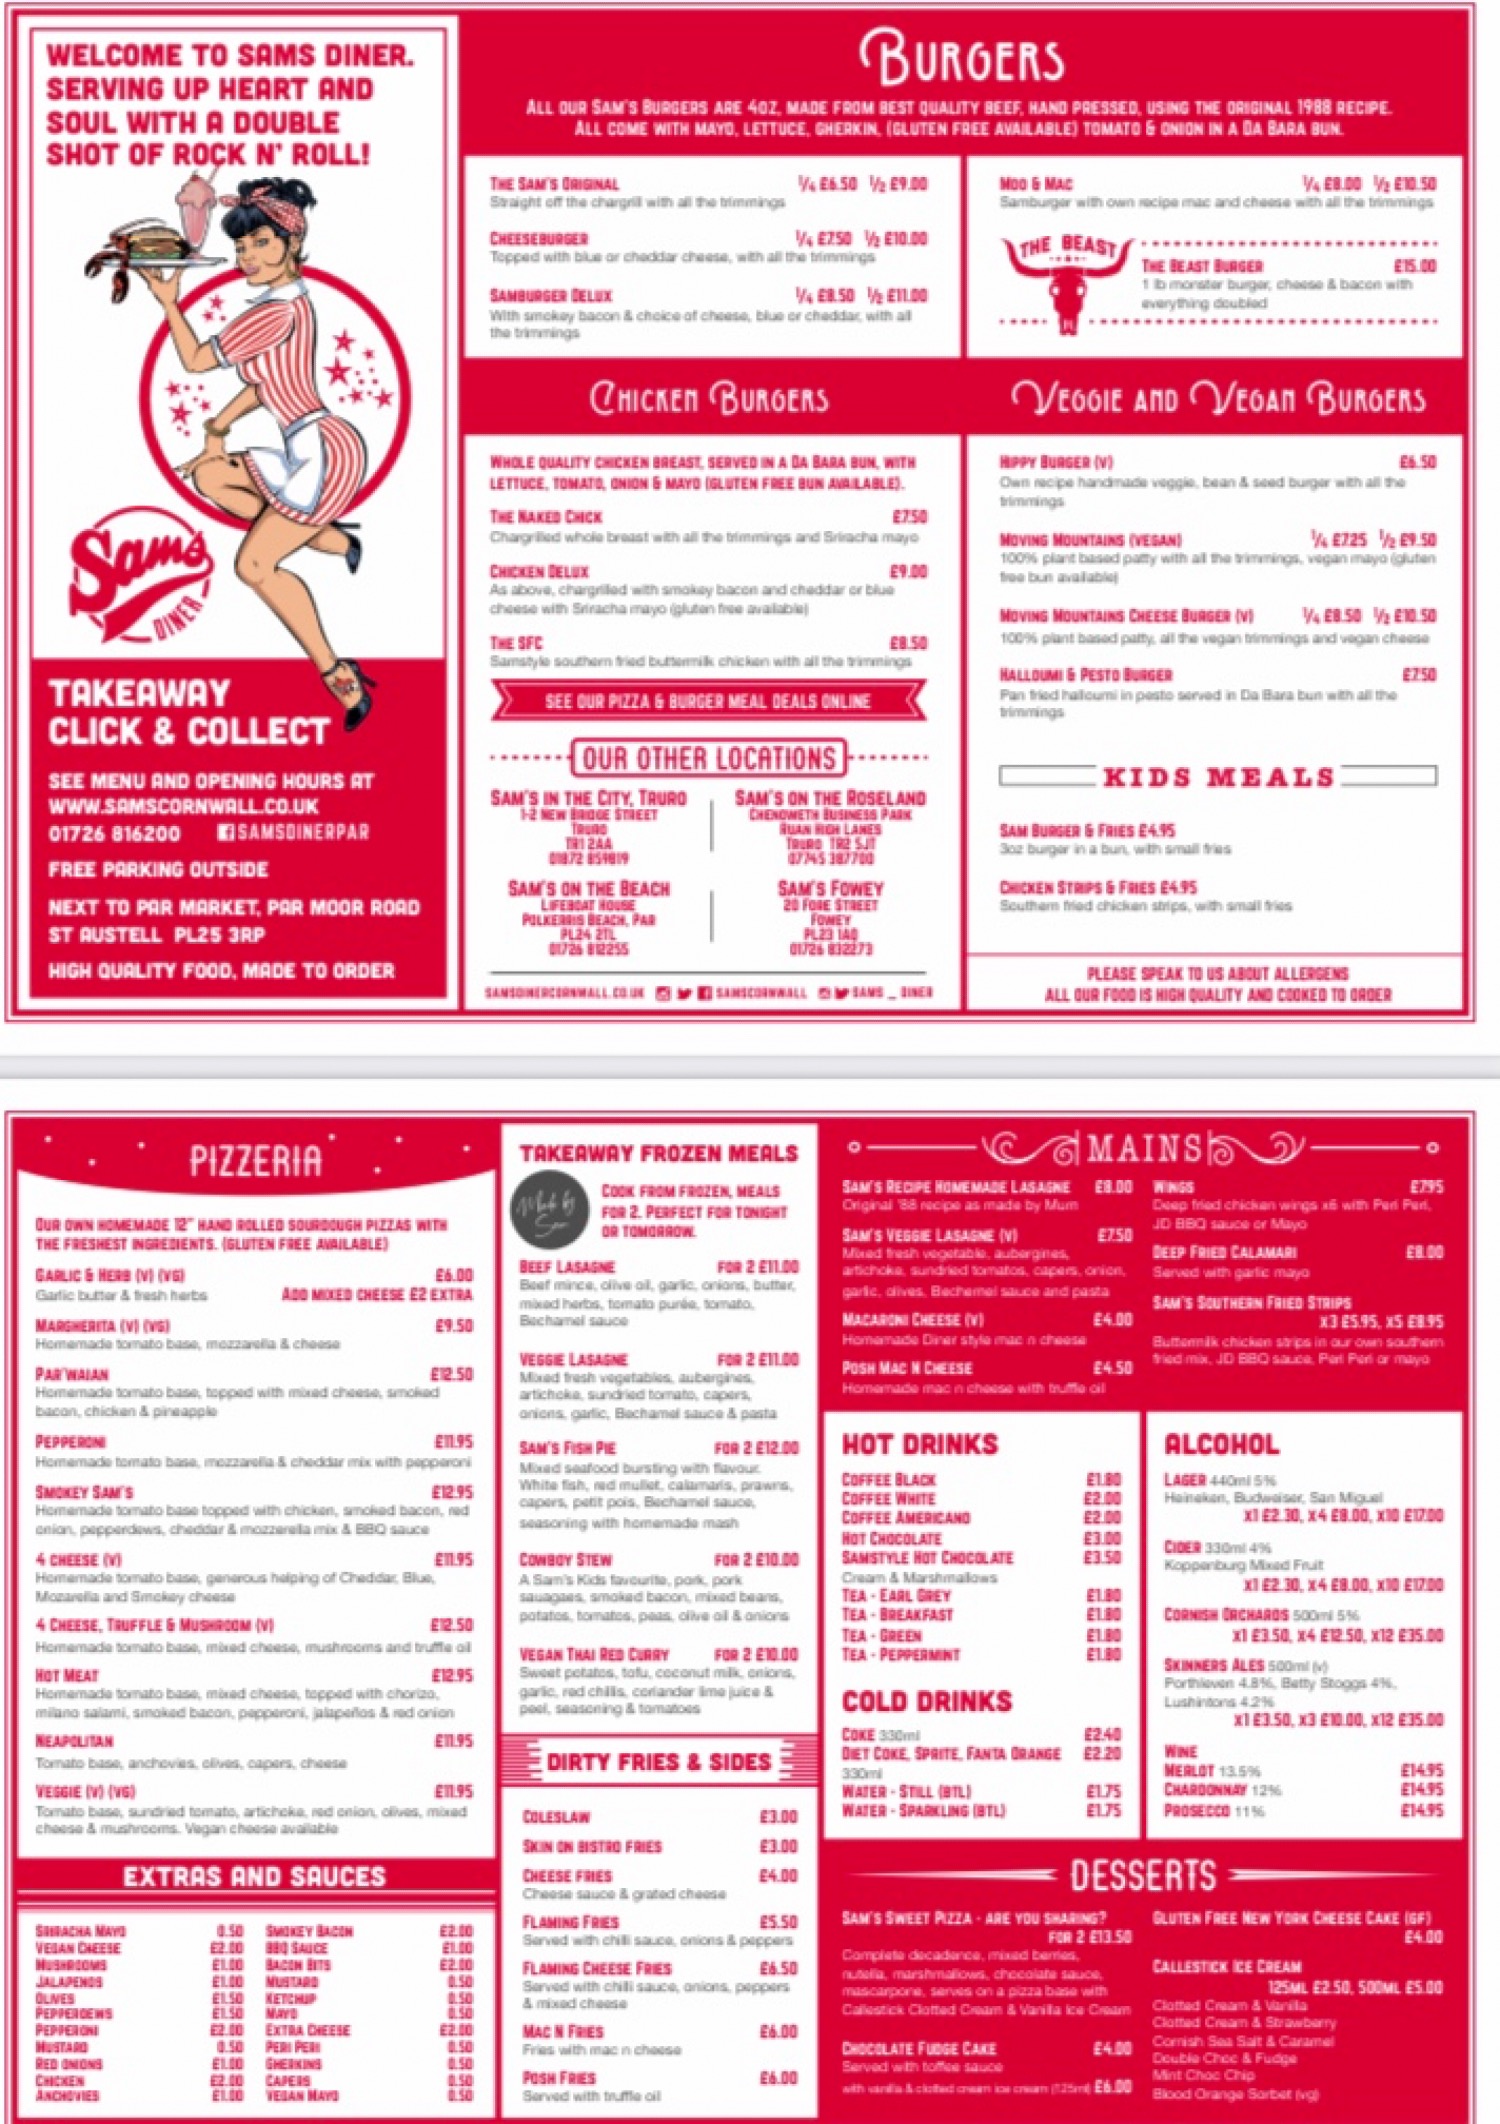 Takeaway Restaurant Menu Page - Sam’s Diner - Saint Austell